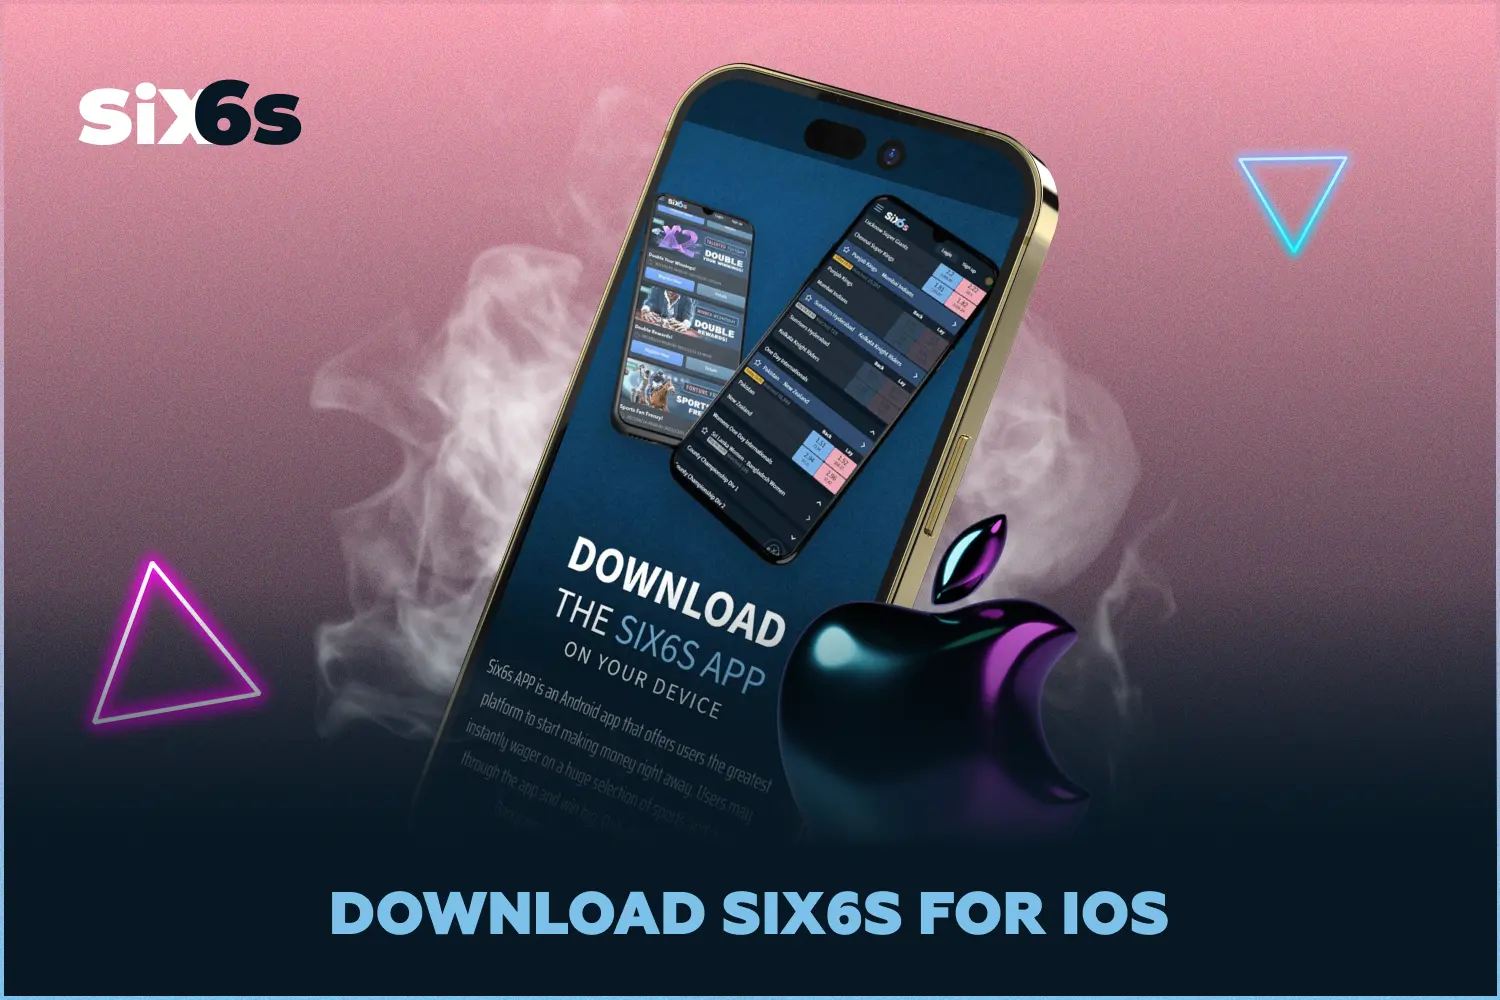 Six6s অ্যাপের iOS সংস্করণ বর্তমানে উপলব্ধ নয়, তবে ব্যবহারকারীরা যেকোনো স্মার্টফোন ব্রাউজার থেকে Six6s মোবাইল সাইট ব্যবহার করতে পারবেন